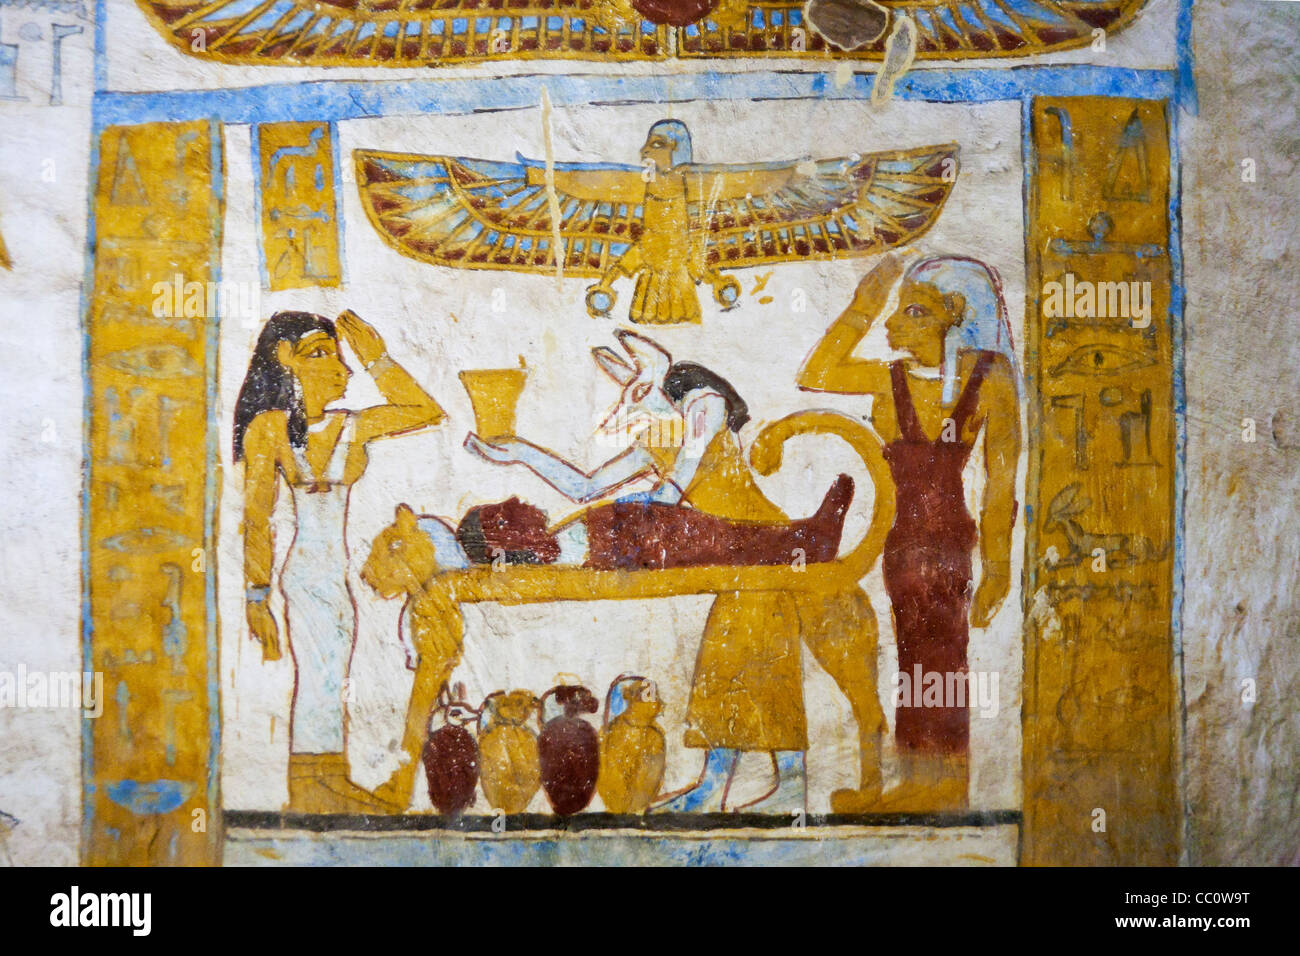 Pareti decorate nella tomba di Bannentui situati in Qarat Qasr Salim villaggio di Bawiti, Oasi Bahariya Egitto. Foto Stock